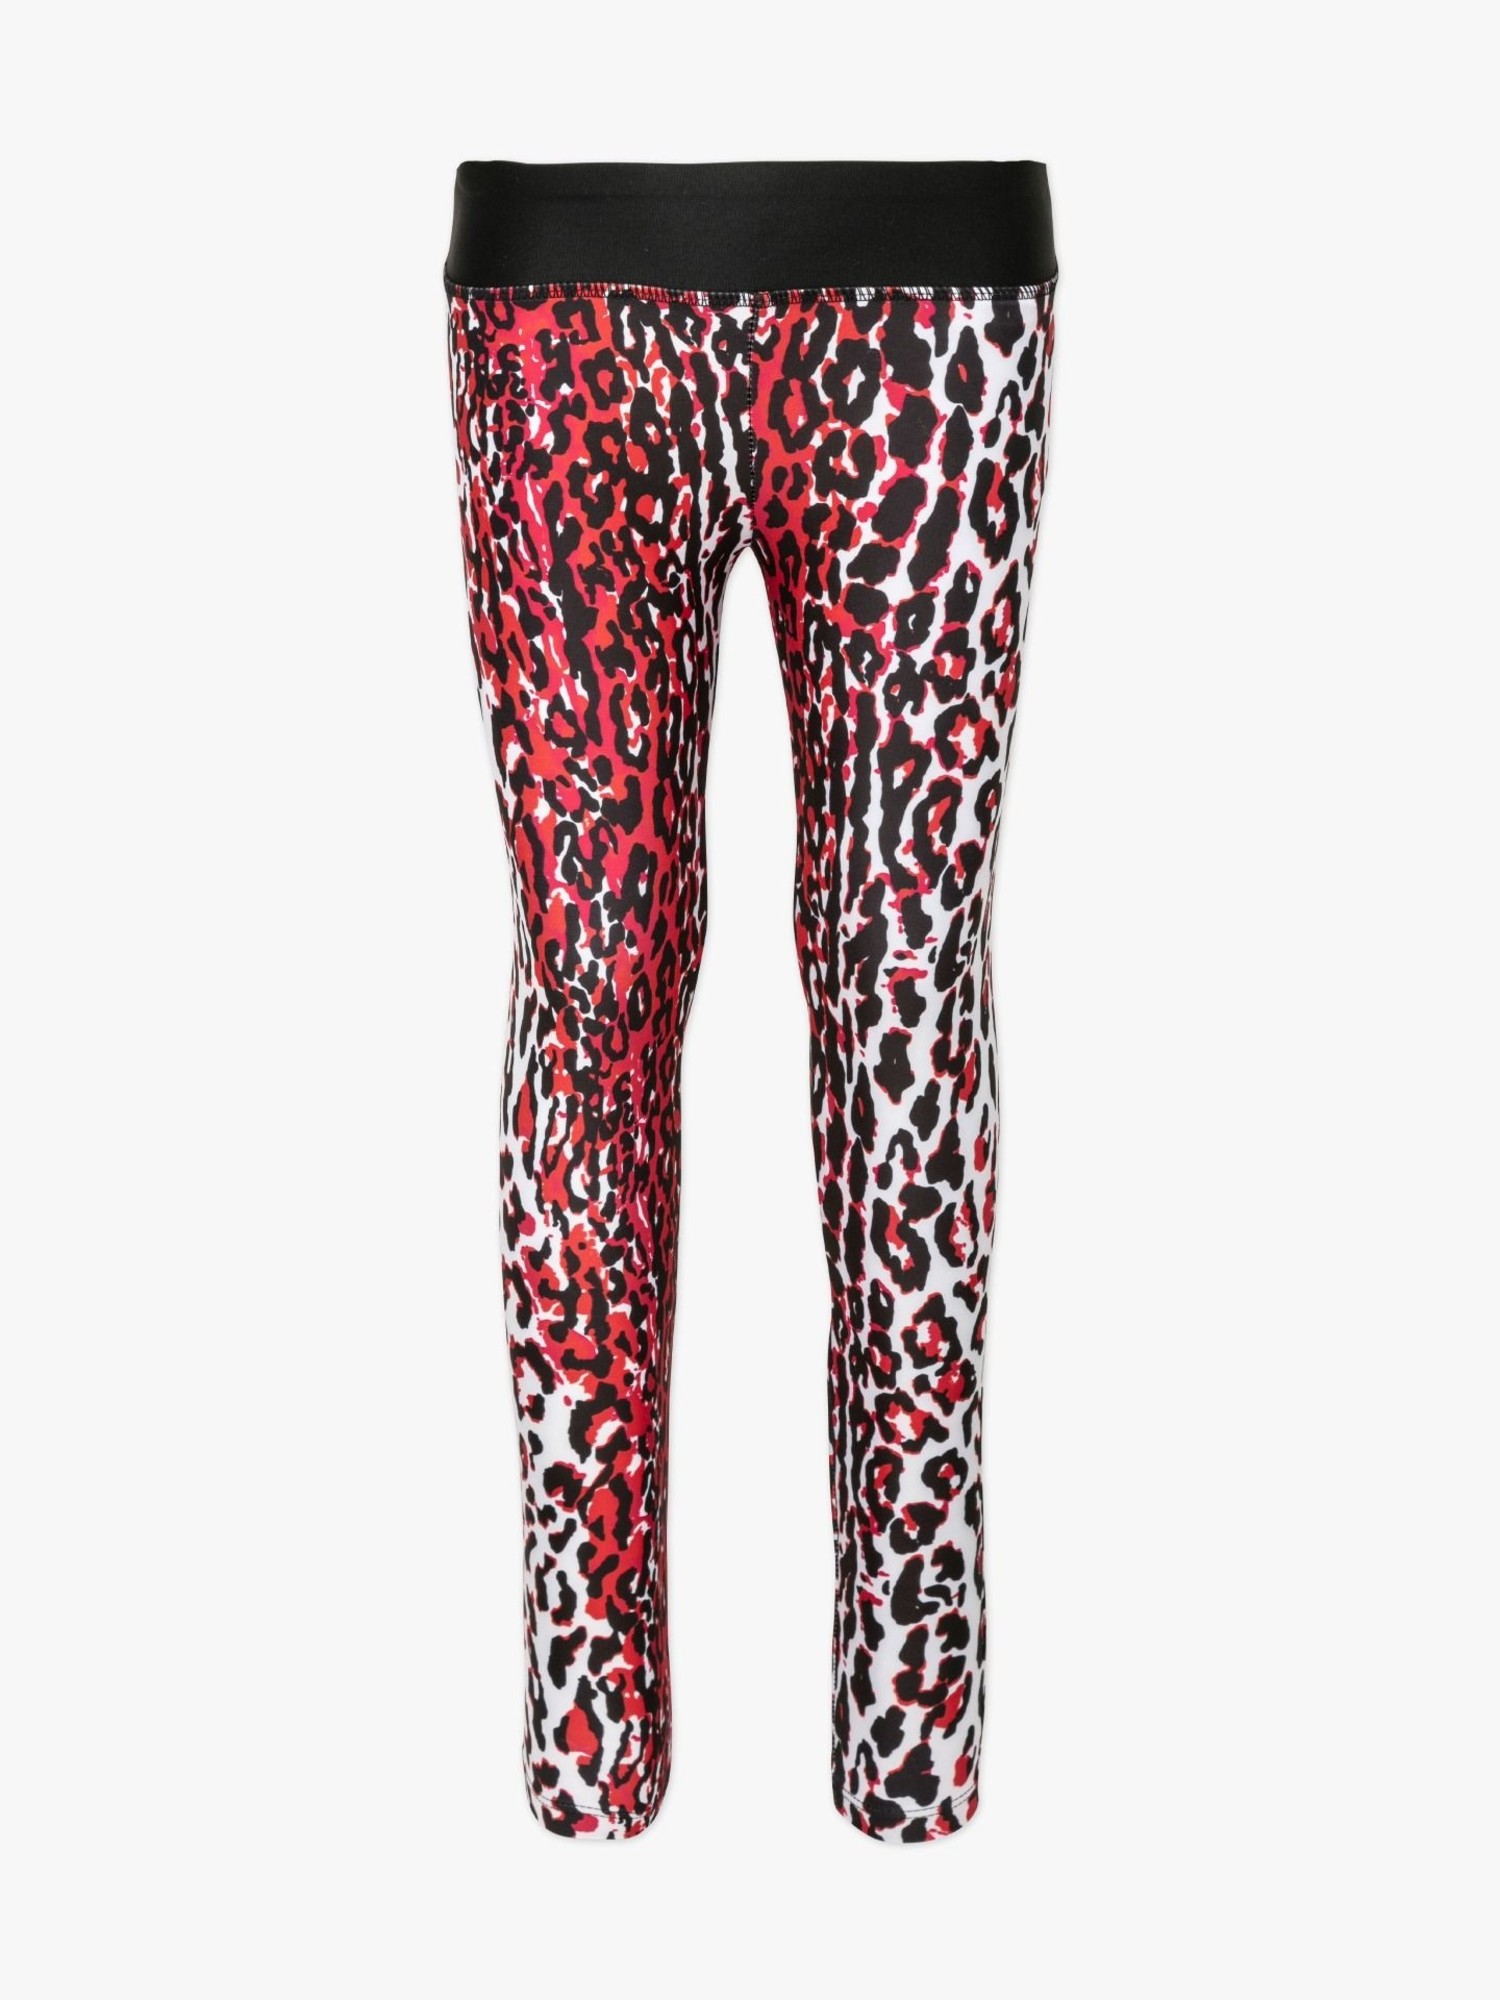 Guess Leopard Print Logo Leggings - P682 AW21 - Bubbles Childrenswear